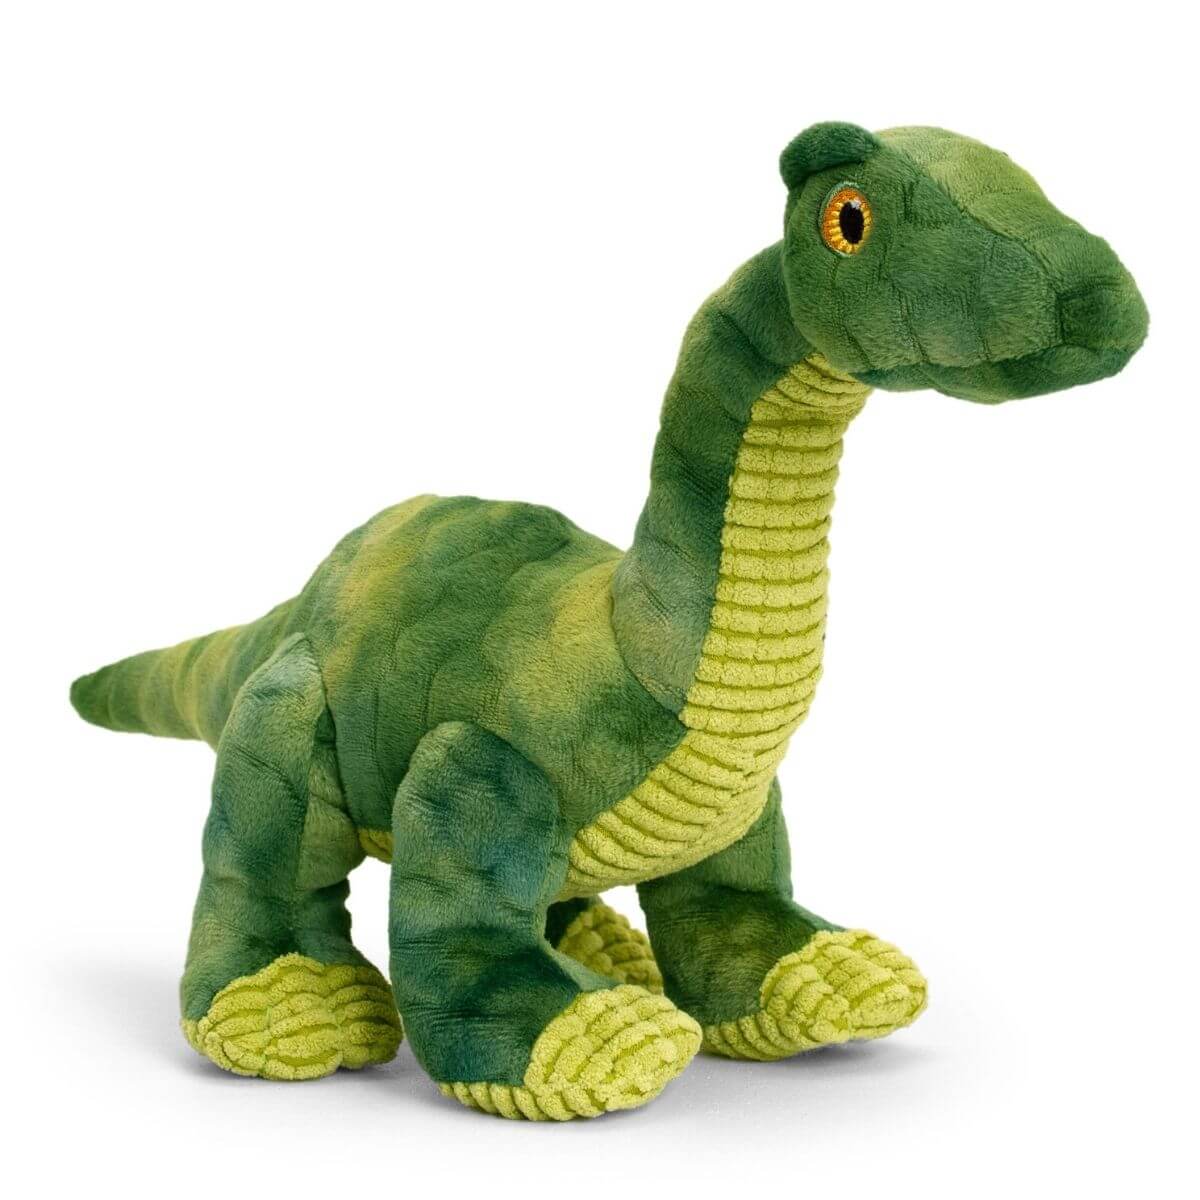 Surtido Peluche Dinosaurios 26cm Keel Toys (4 unidades)